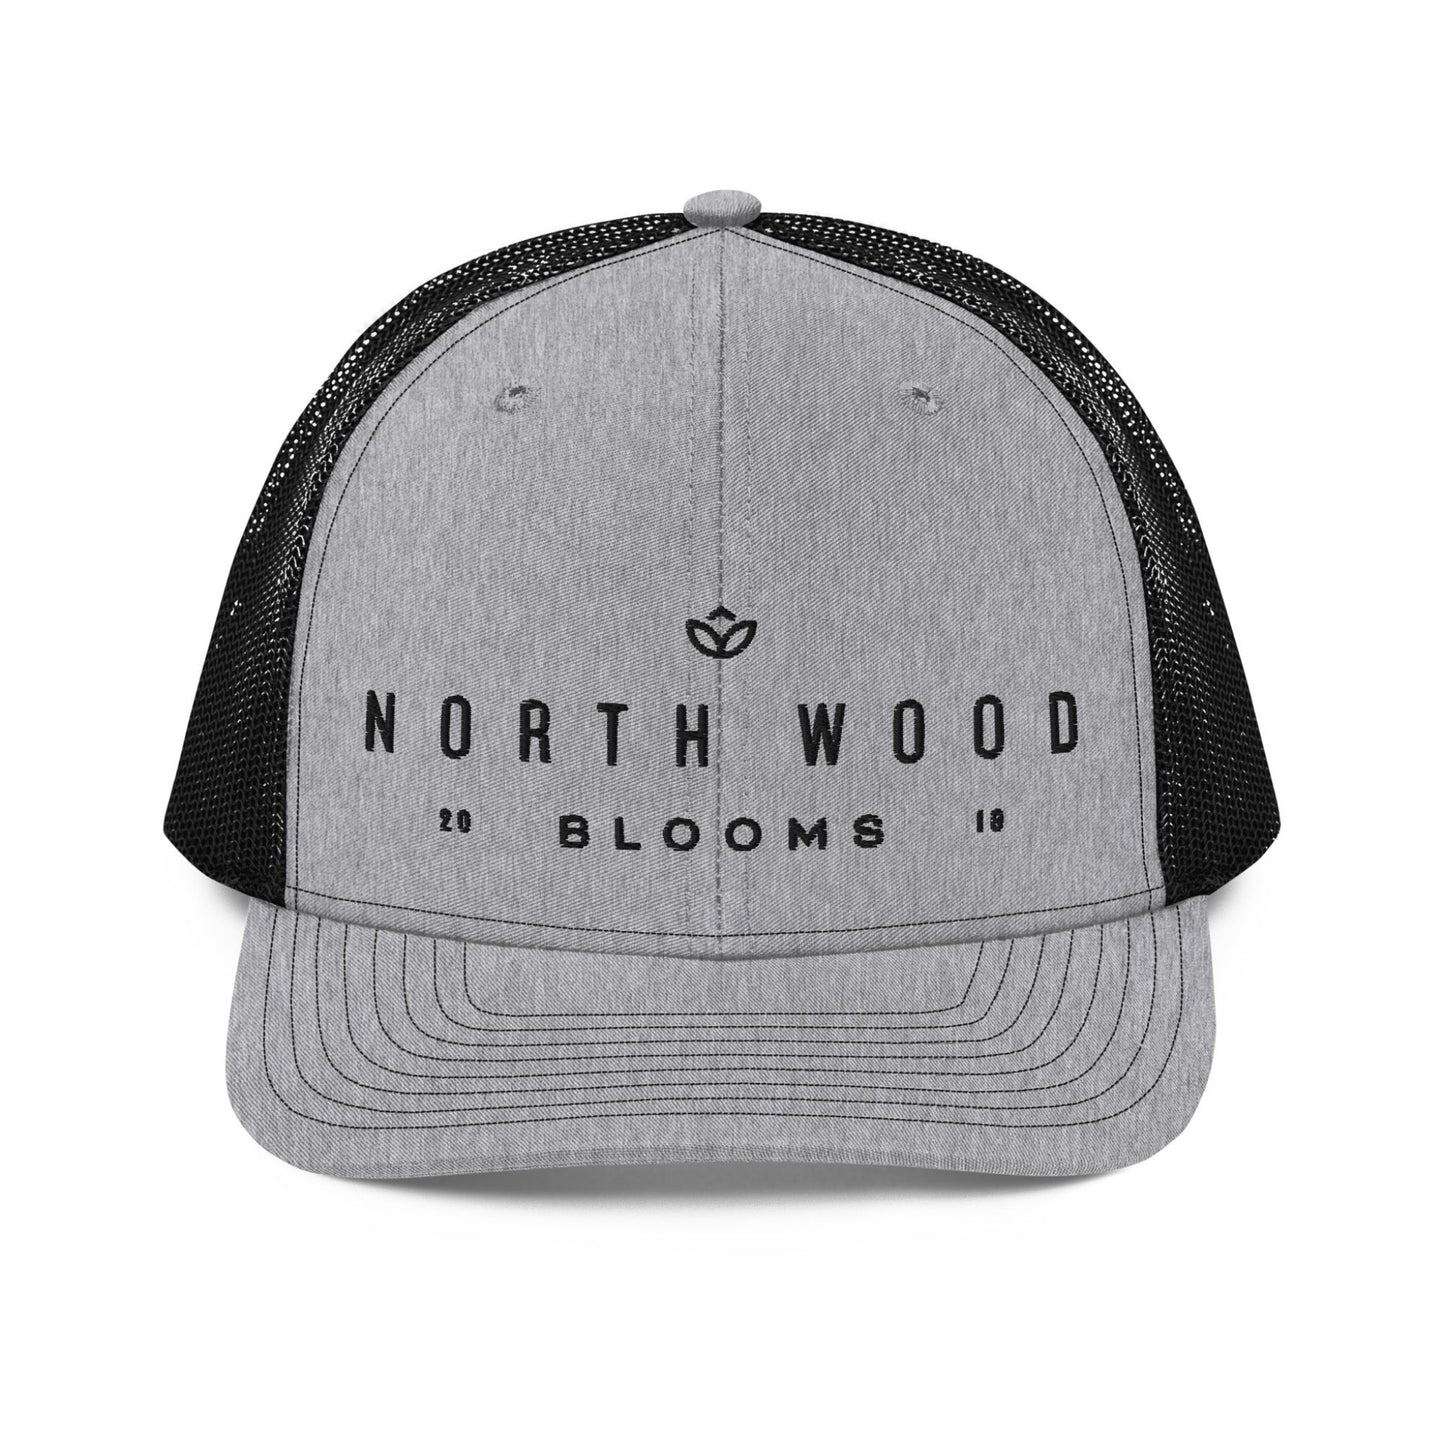 Black and grey "North Wood Blooms" snapback unisex cap.